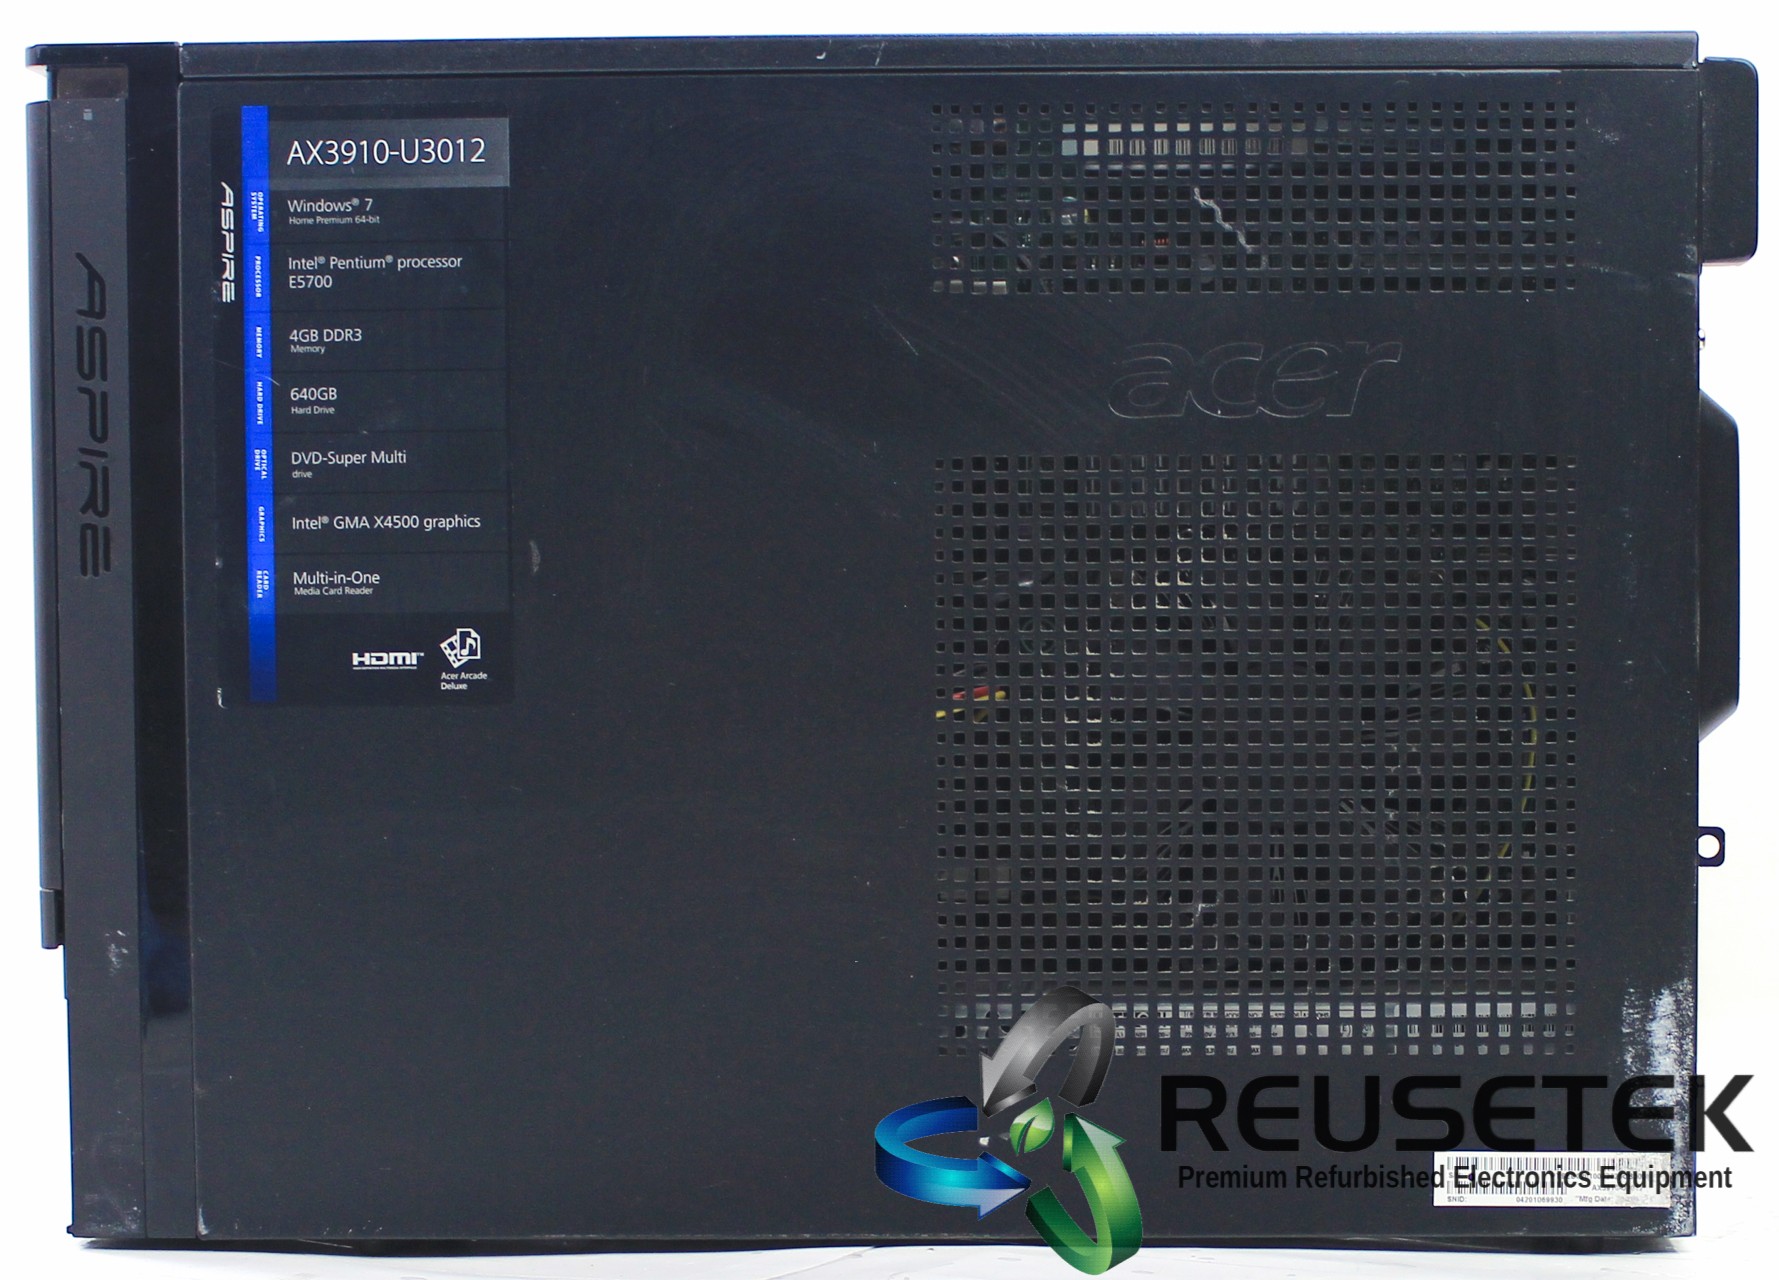 50003176895938-Acer Aspire AX3910-U3012 Desktop PC-image